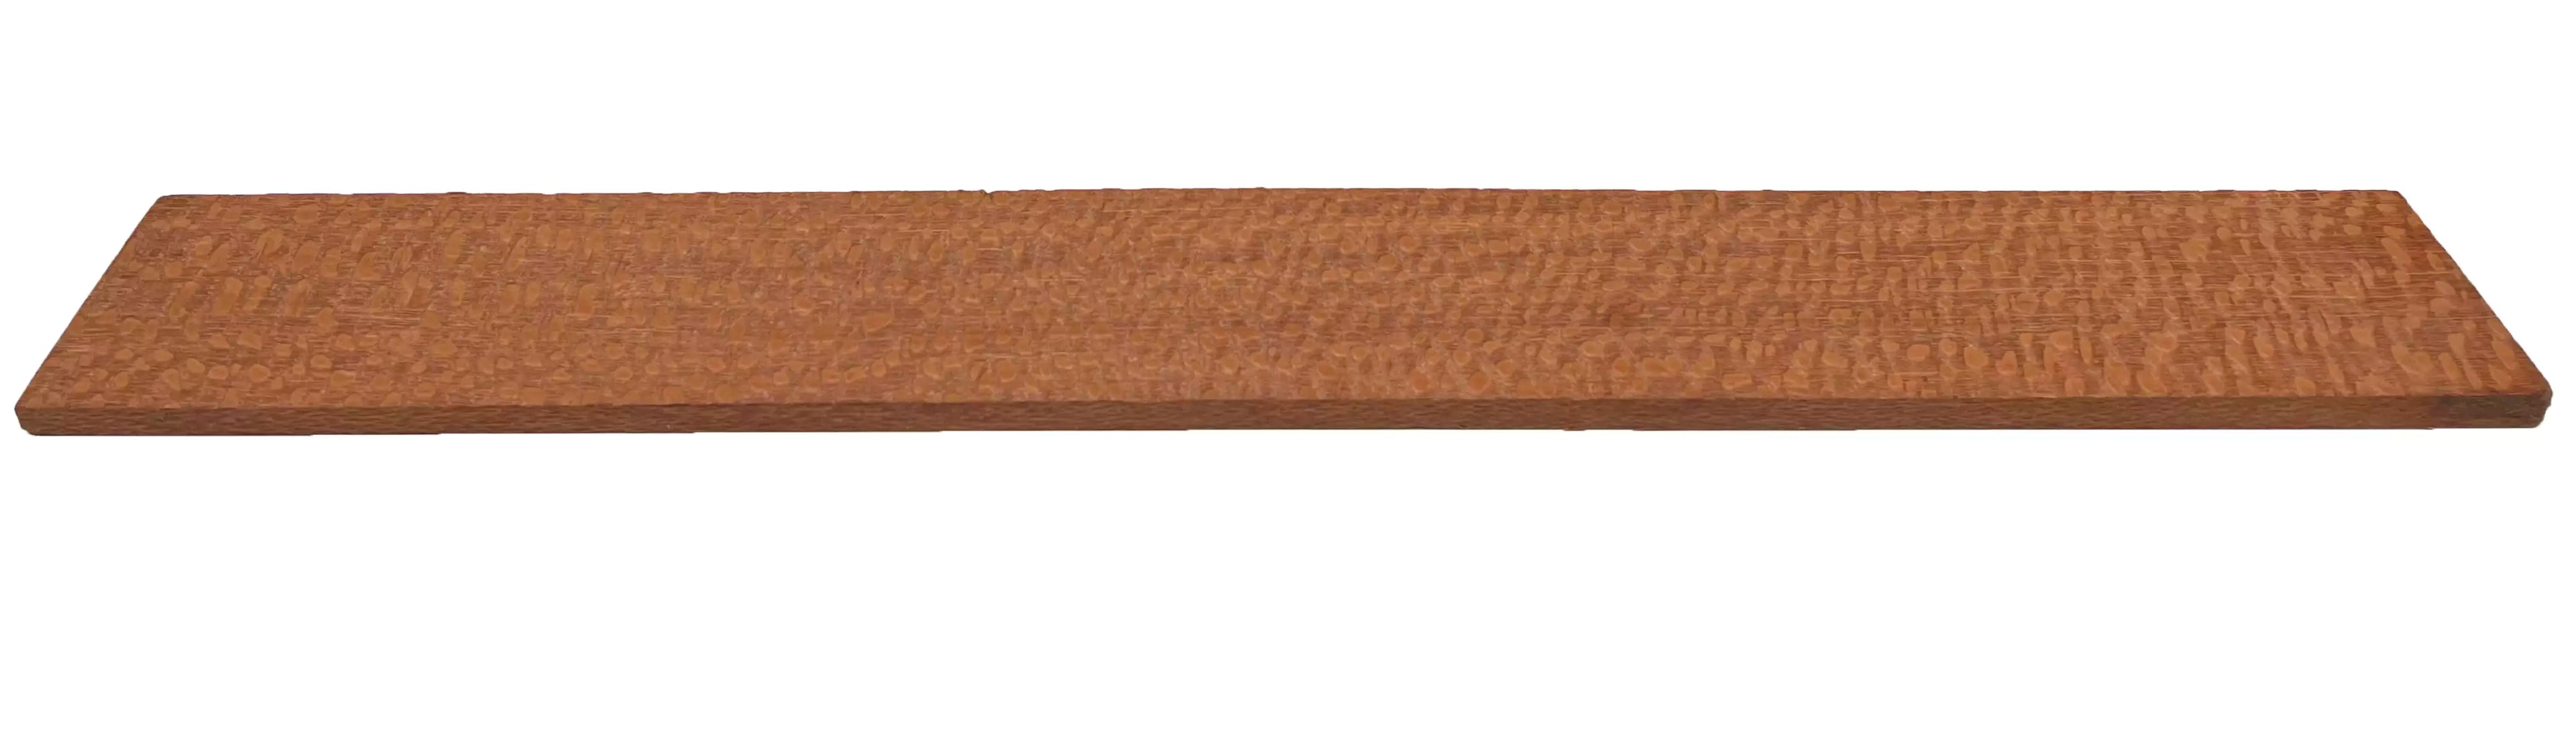 Leopardwood Guitar Fingerboard Blank - Exotic Wood Zone - Buy online Across USA 